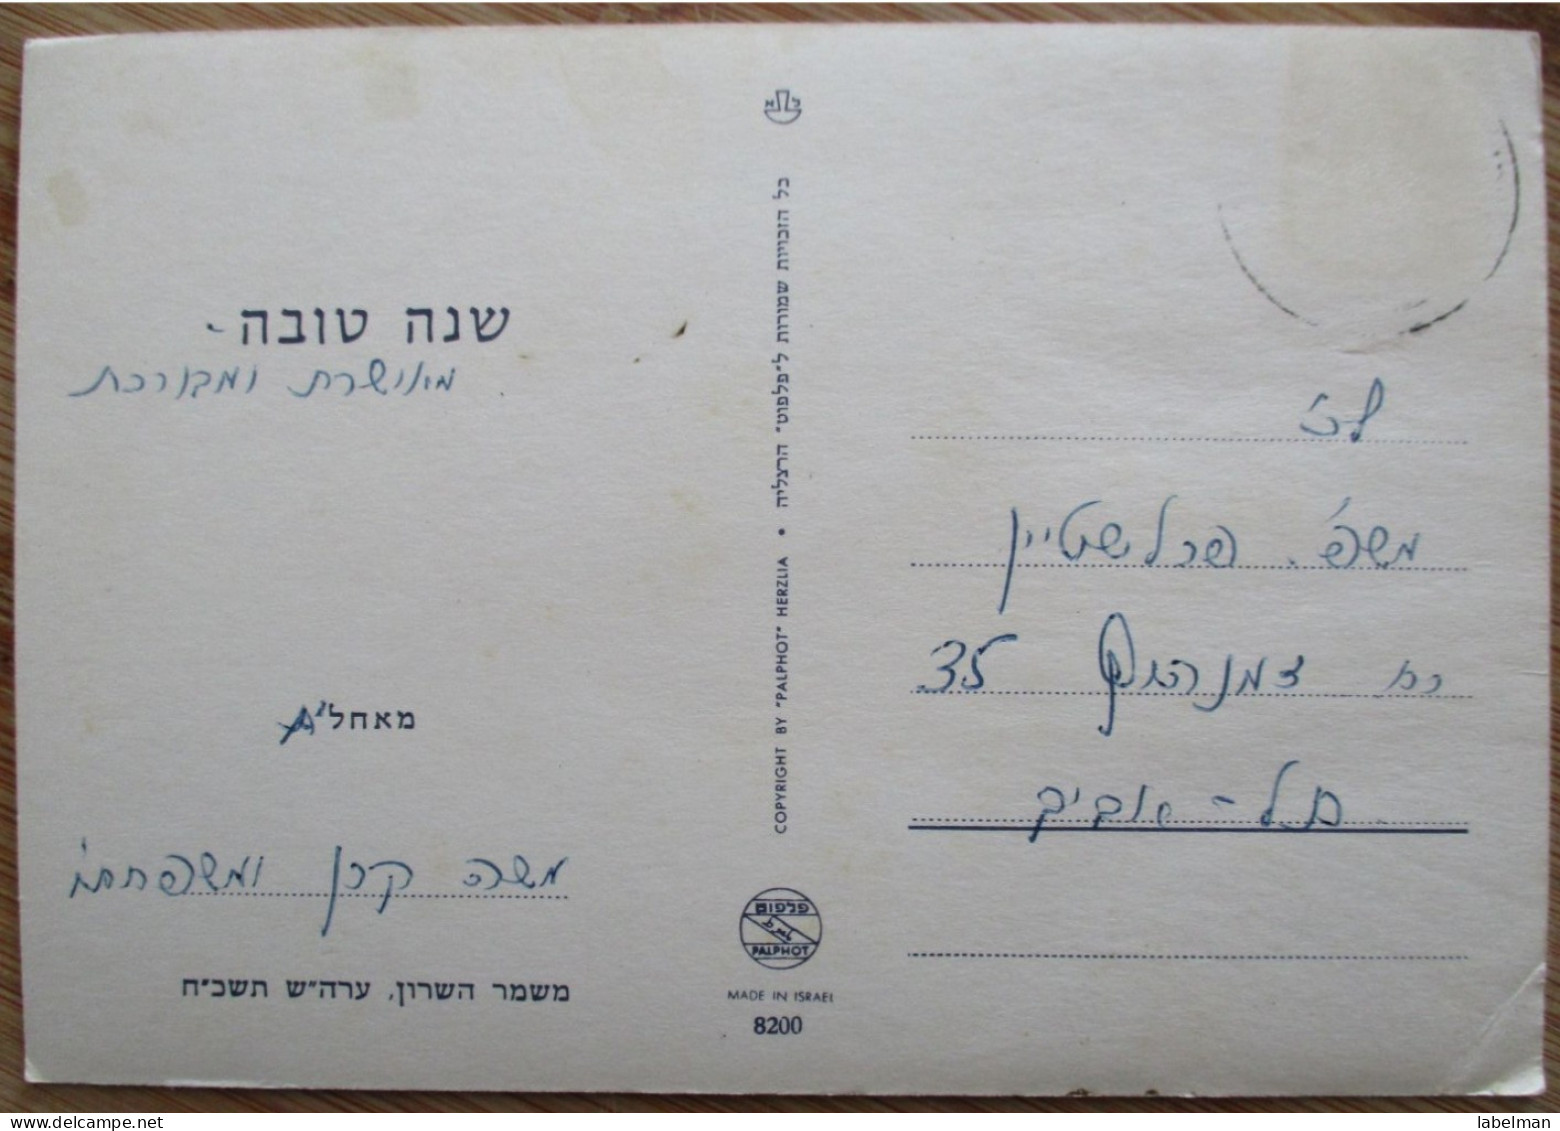 ISRAEL KIBBUTZ MISHMAR HASHARON AK CARD SHANA TOVA NEW YEAR JUDAICA PC CP POSTKARTE CARTE POSTALE POSTCARD ANSICHTSKARTE - Hotel Labels